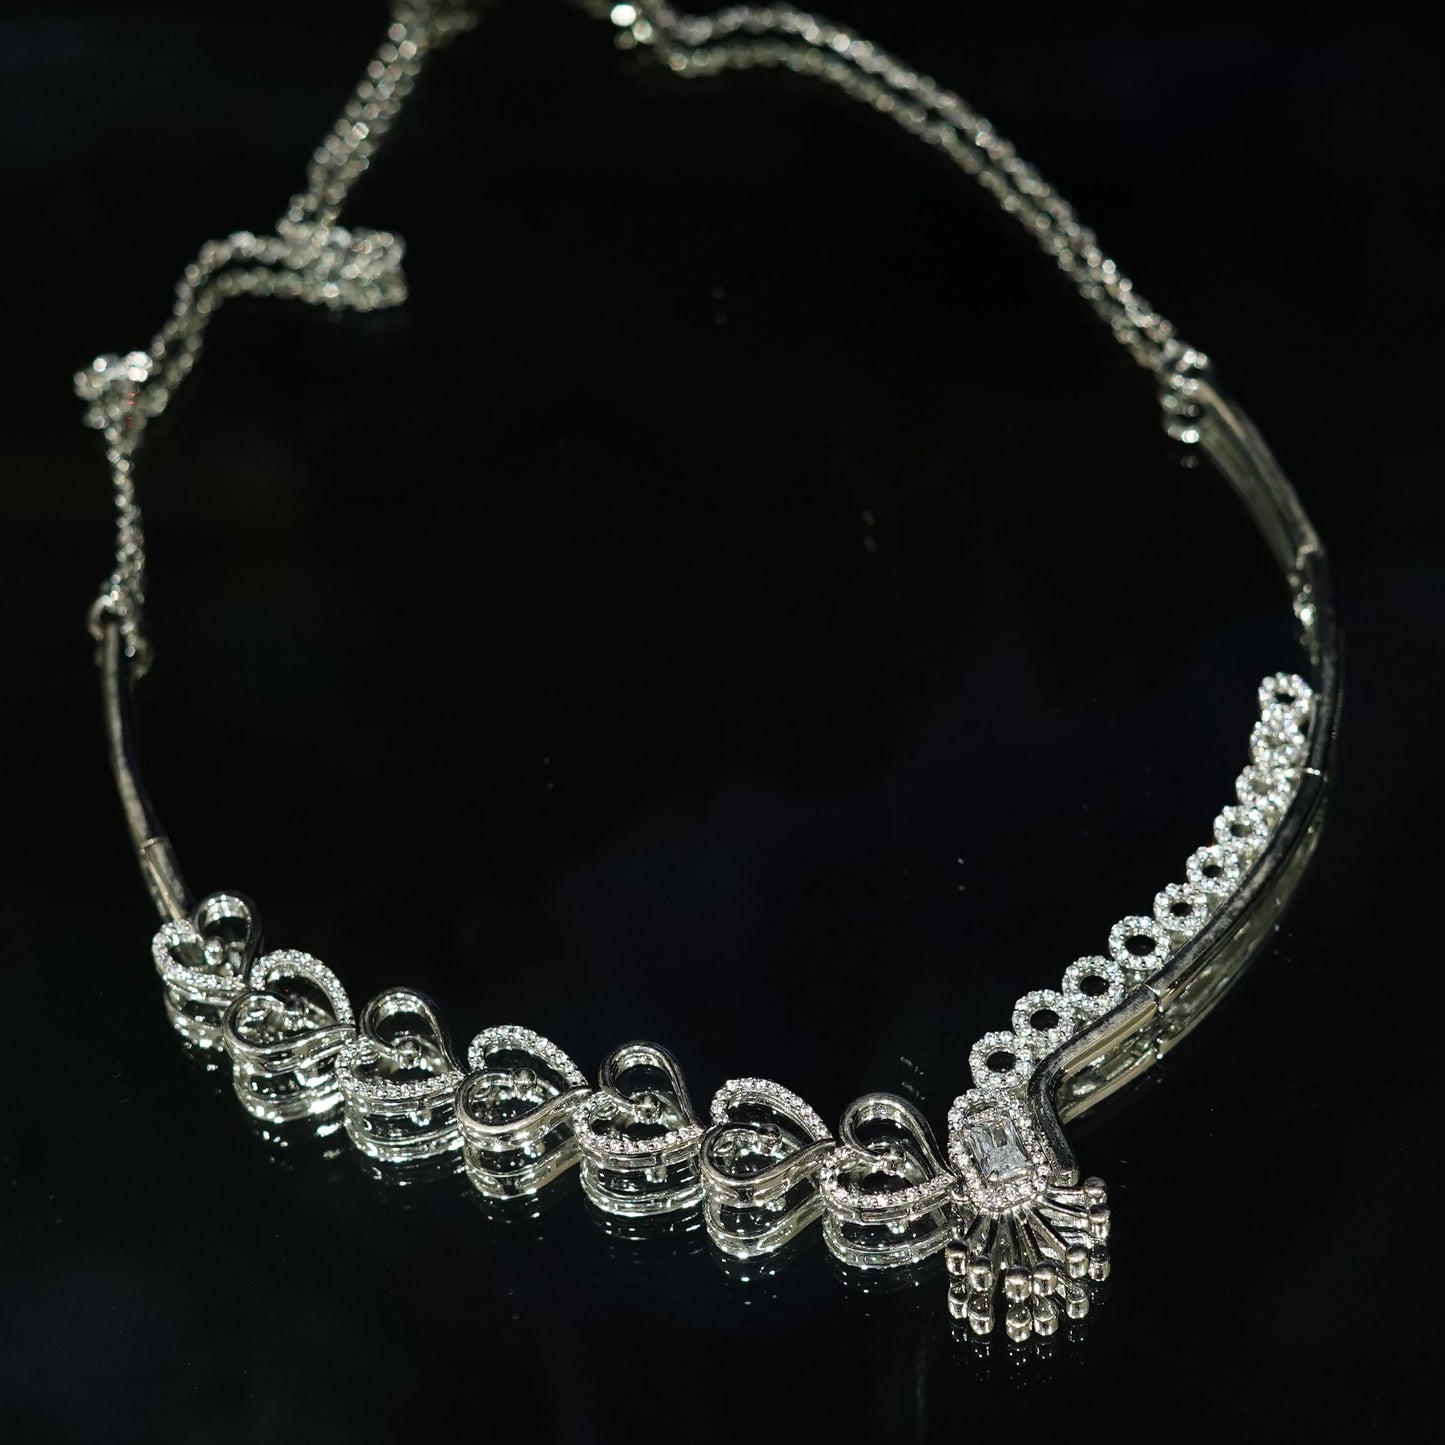 Sterling Silver Heart Design Necklace